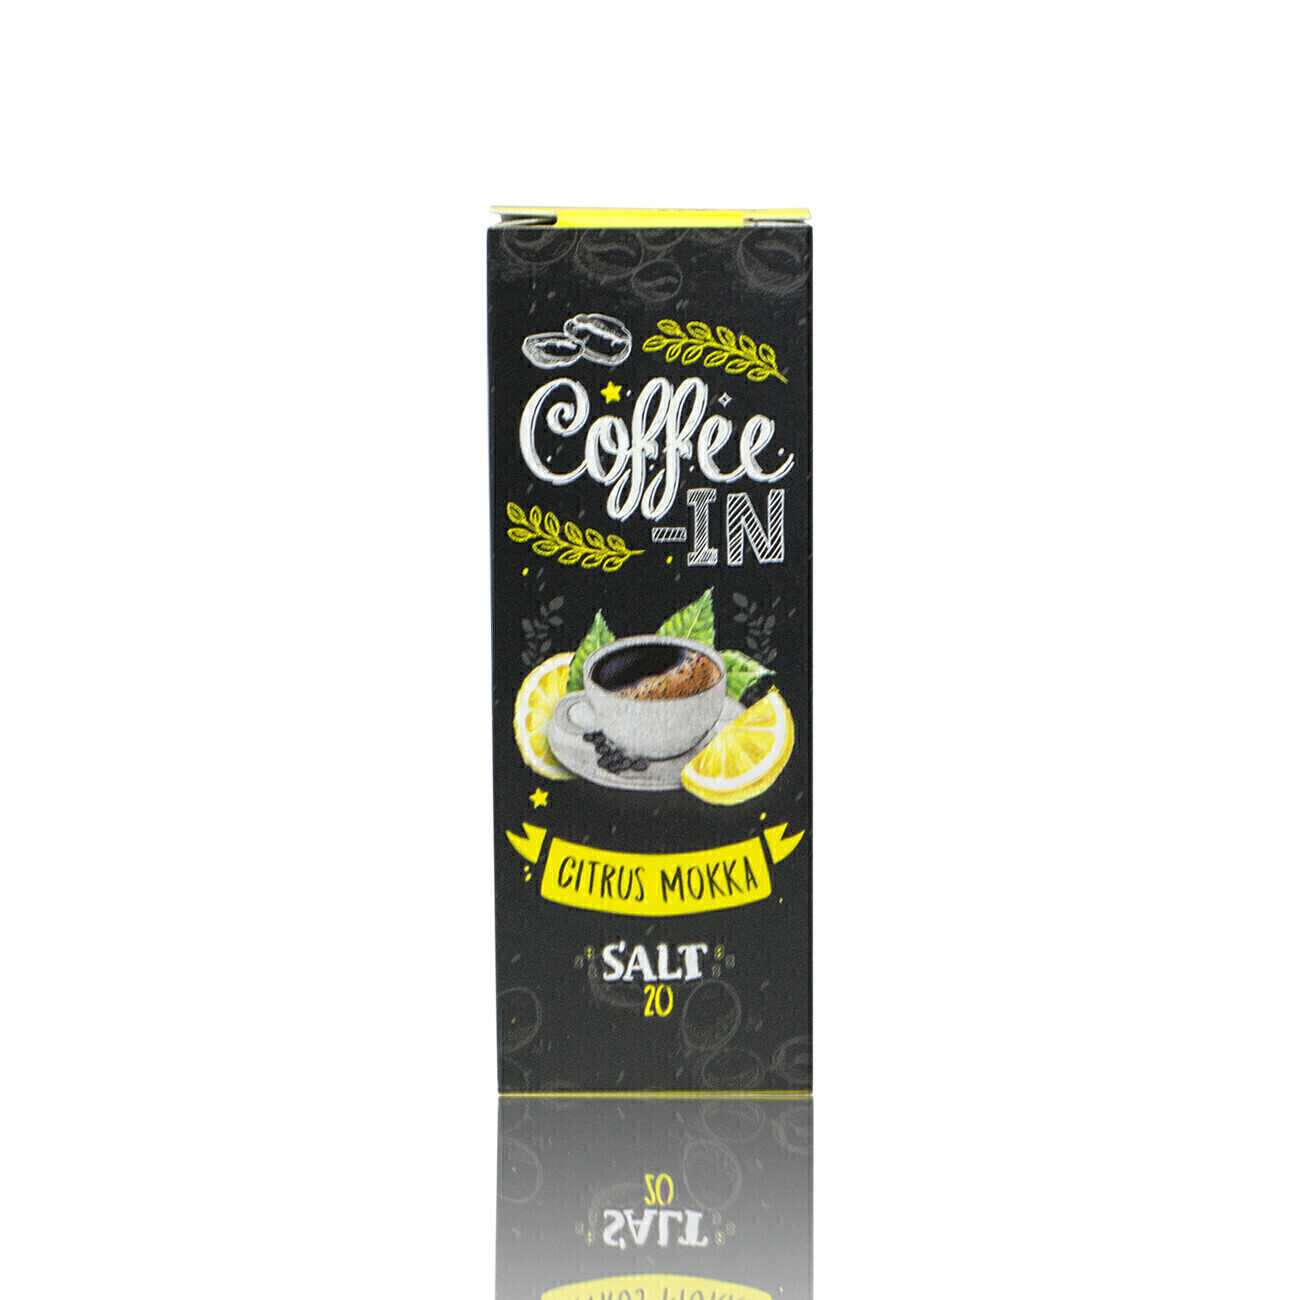 COFFEE-IN SALT: CITRUS MOKKA 20MG